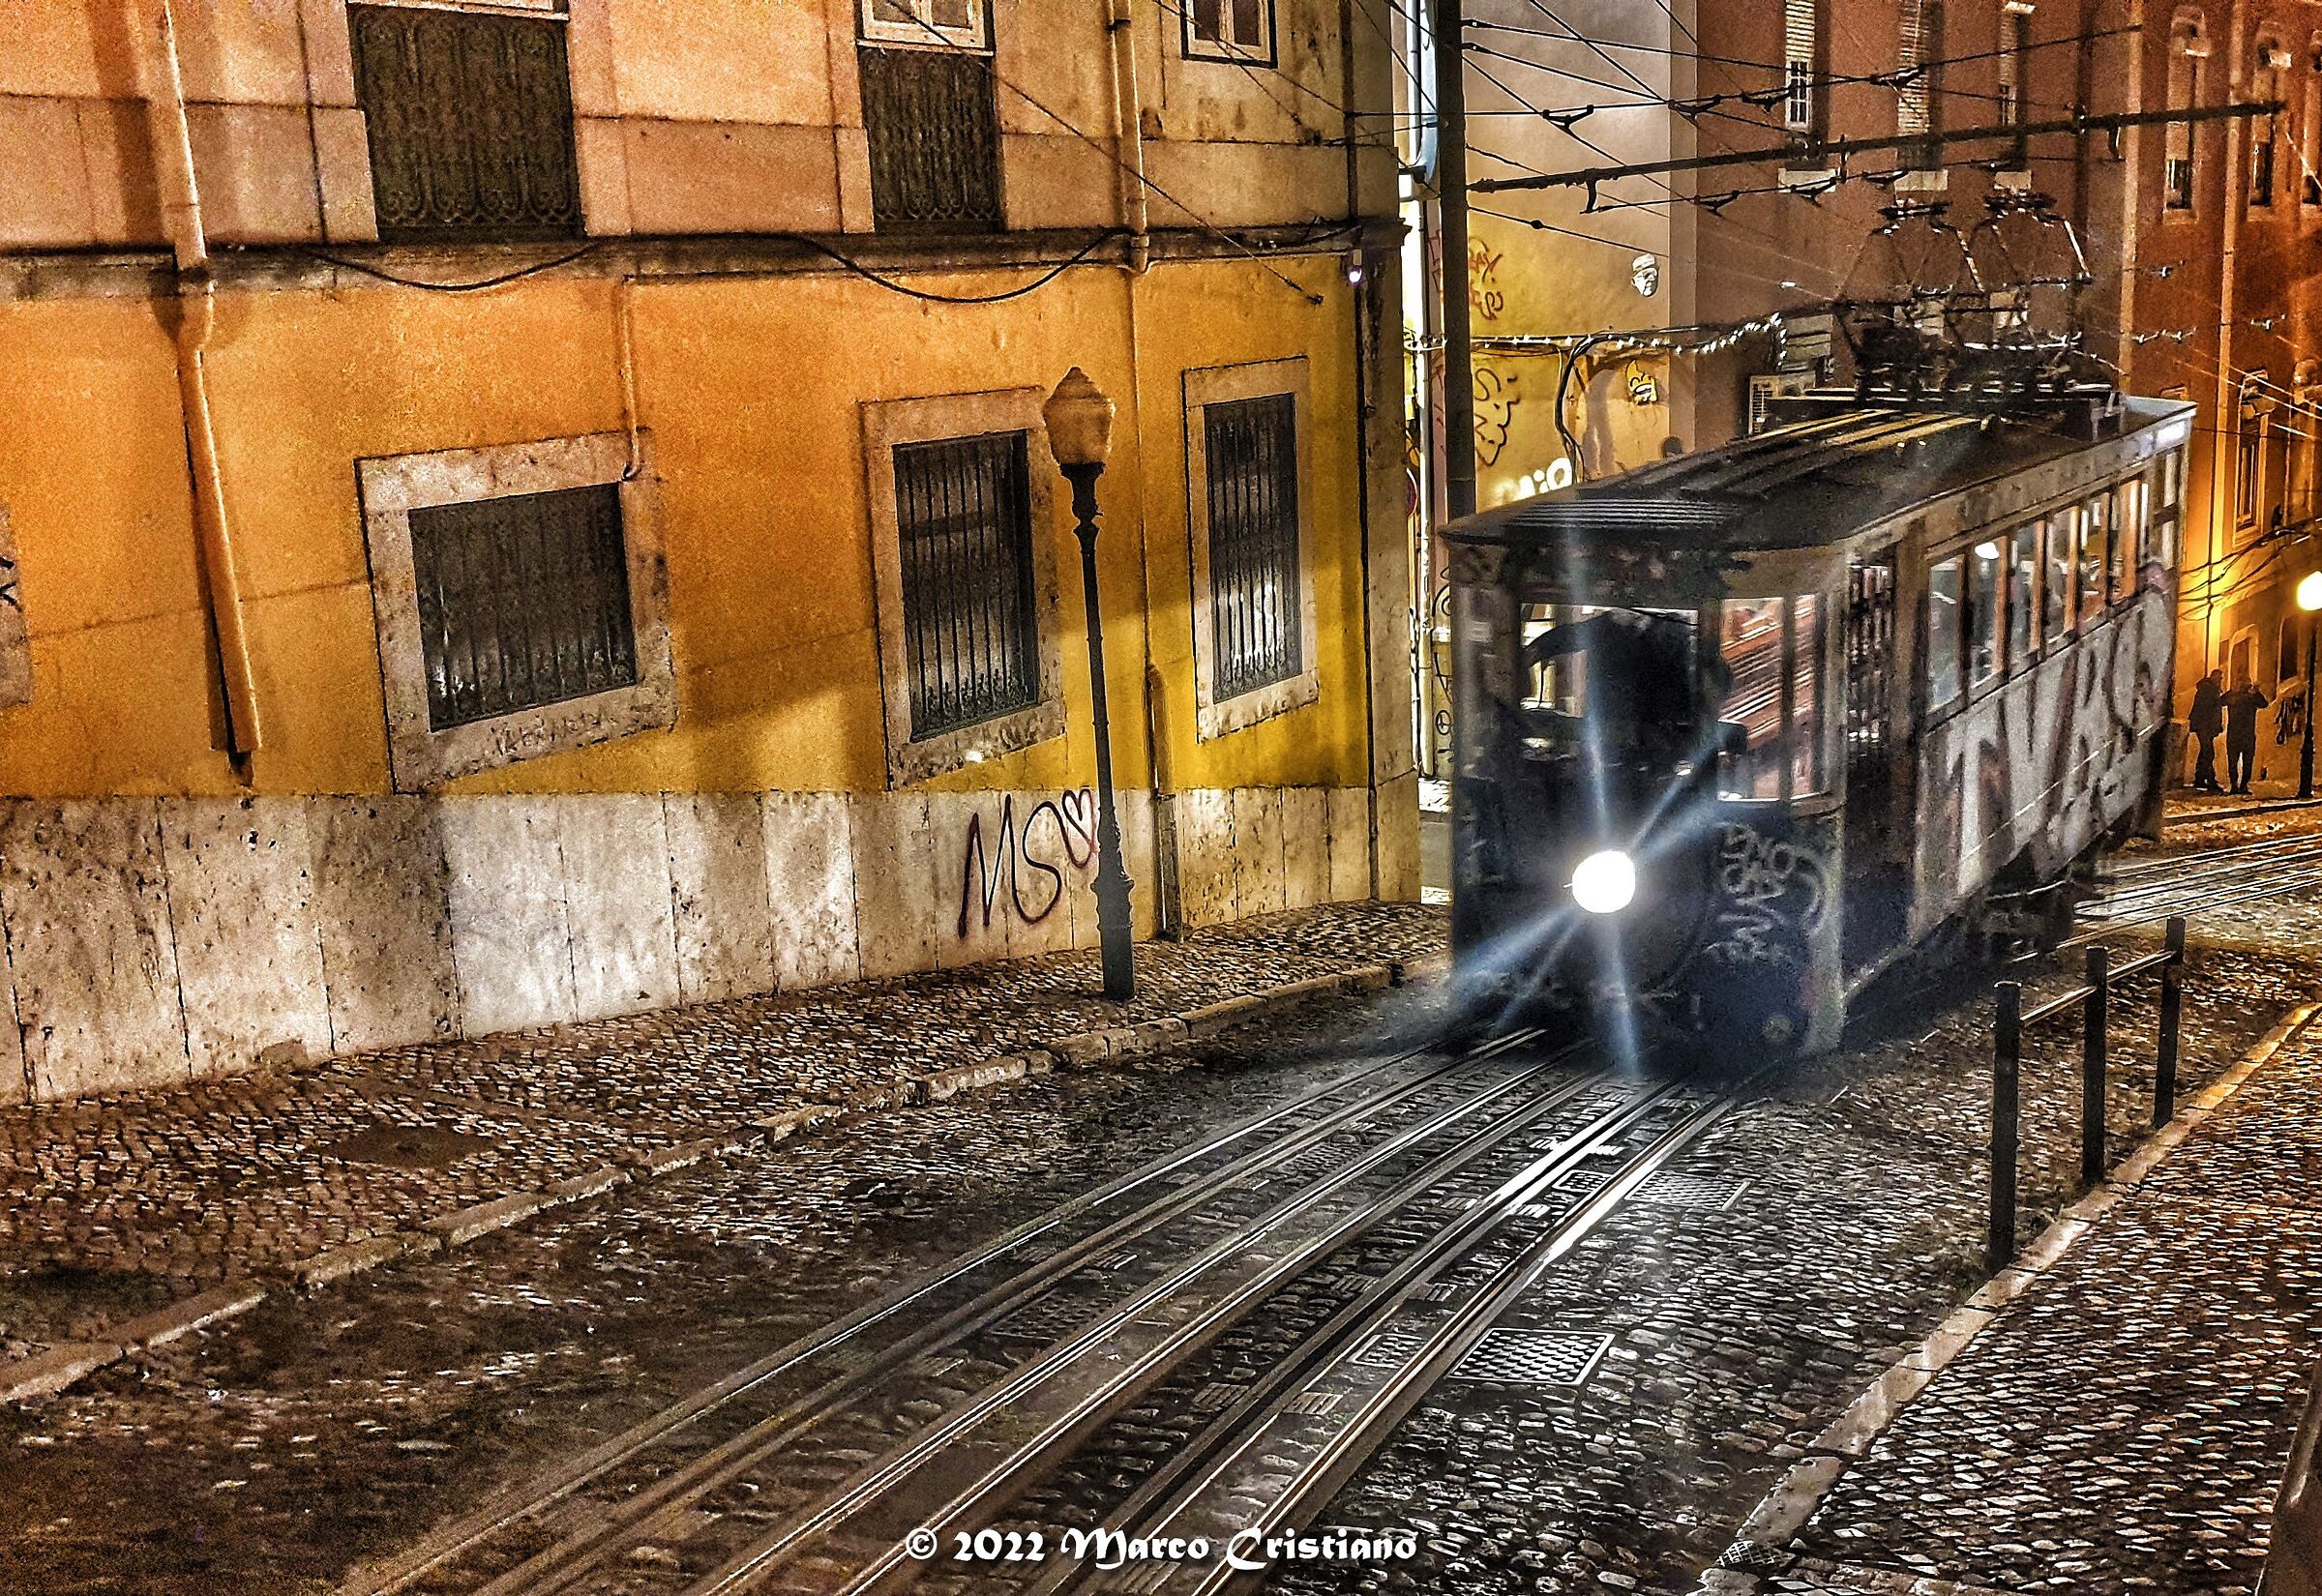 Tram Lisbona.....